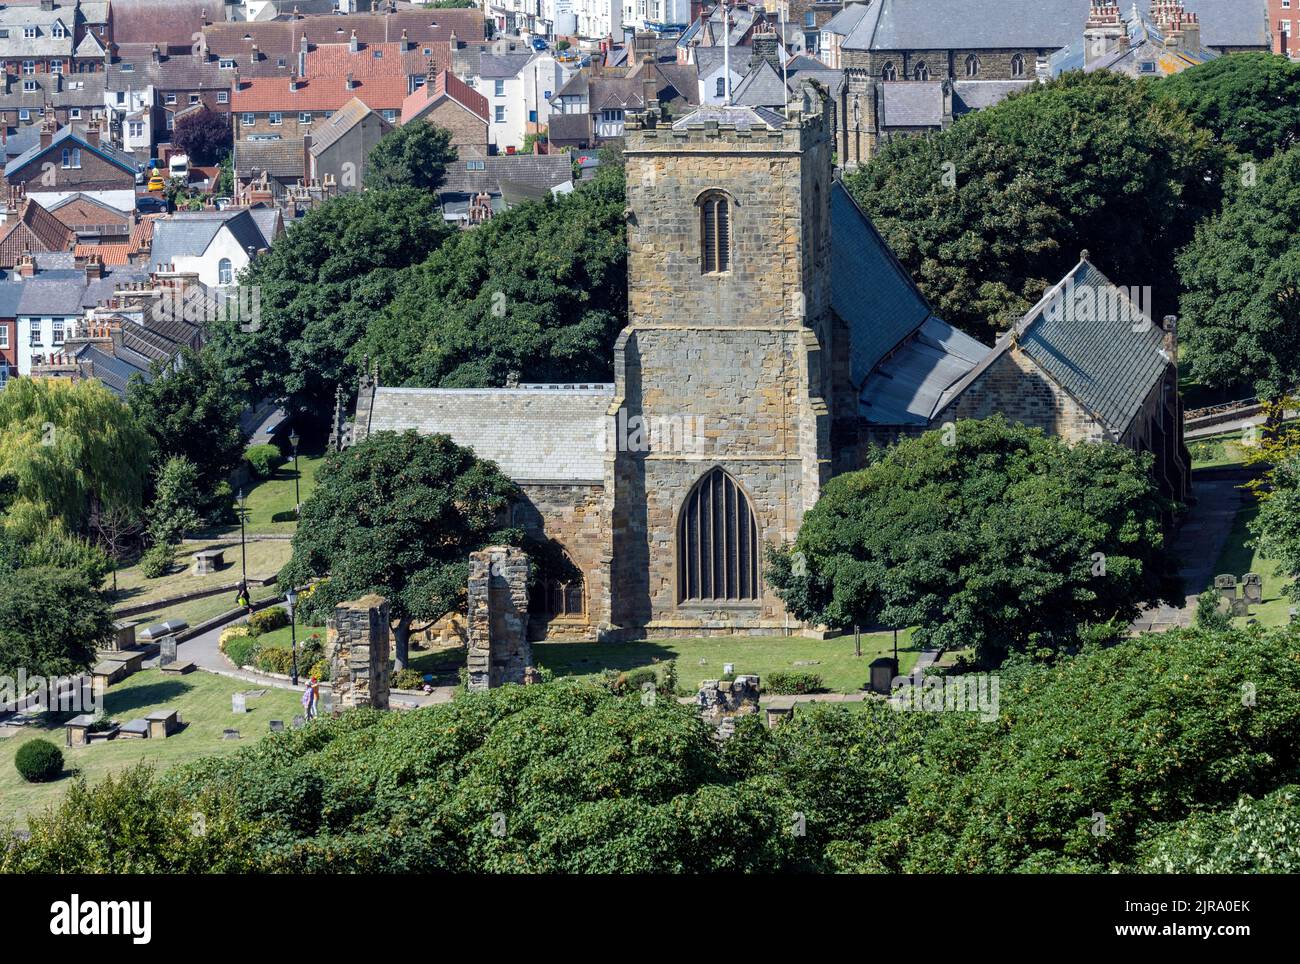 St Mary's Church, Scarborough, North Yorkshire, Inglaterra, Reino Unido, edificio catalogado de grado I. Foto de stock